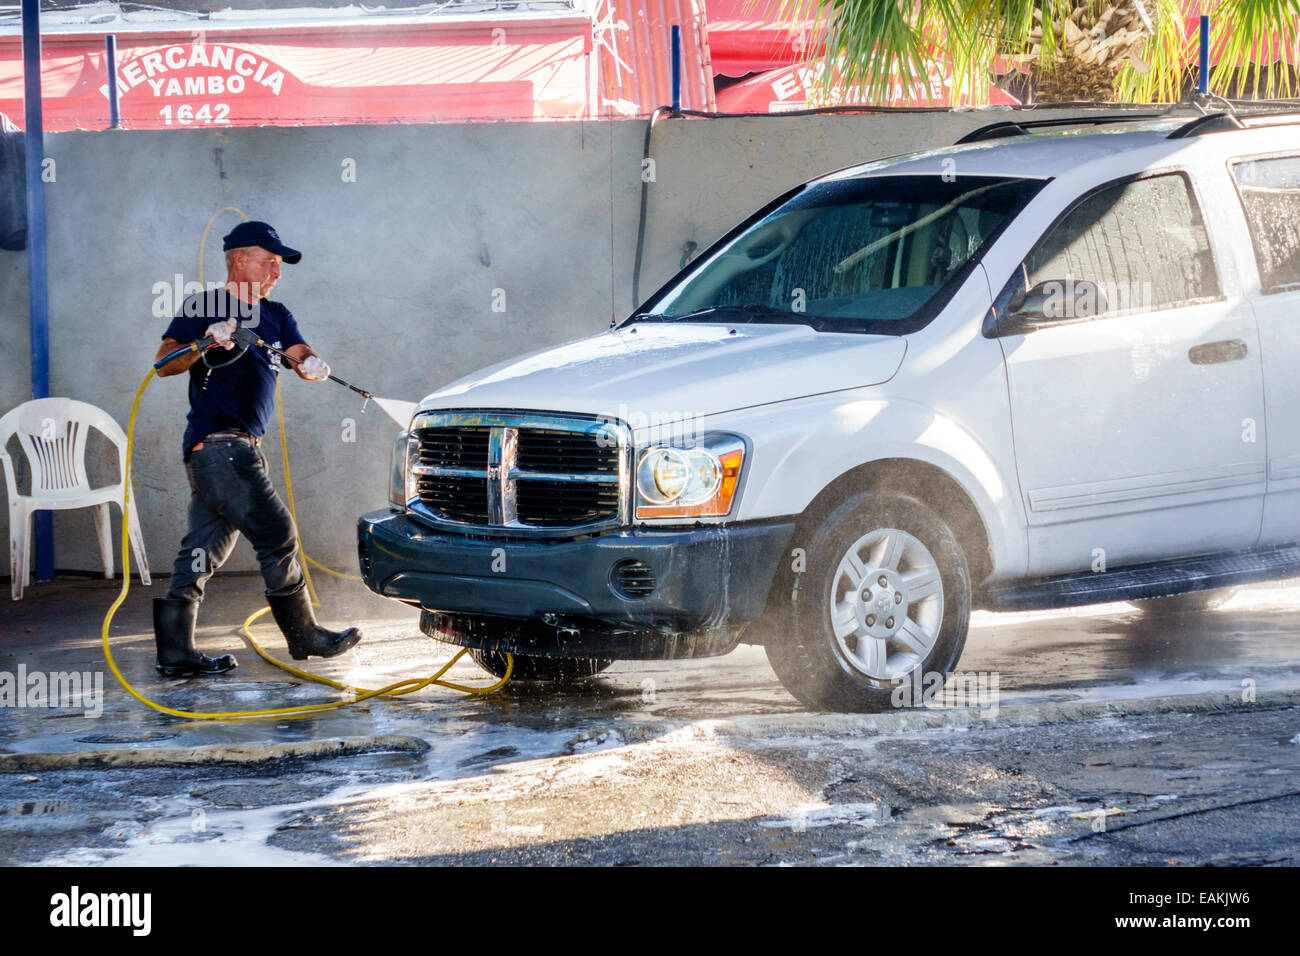 Miami Florida,Little Havana,car wash,Hispanic man men male,working,work,washing,cleaning,high power washer wand,SUV,FL141101126 Stock Photo